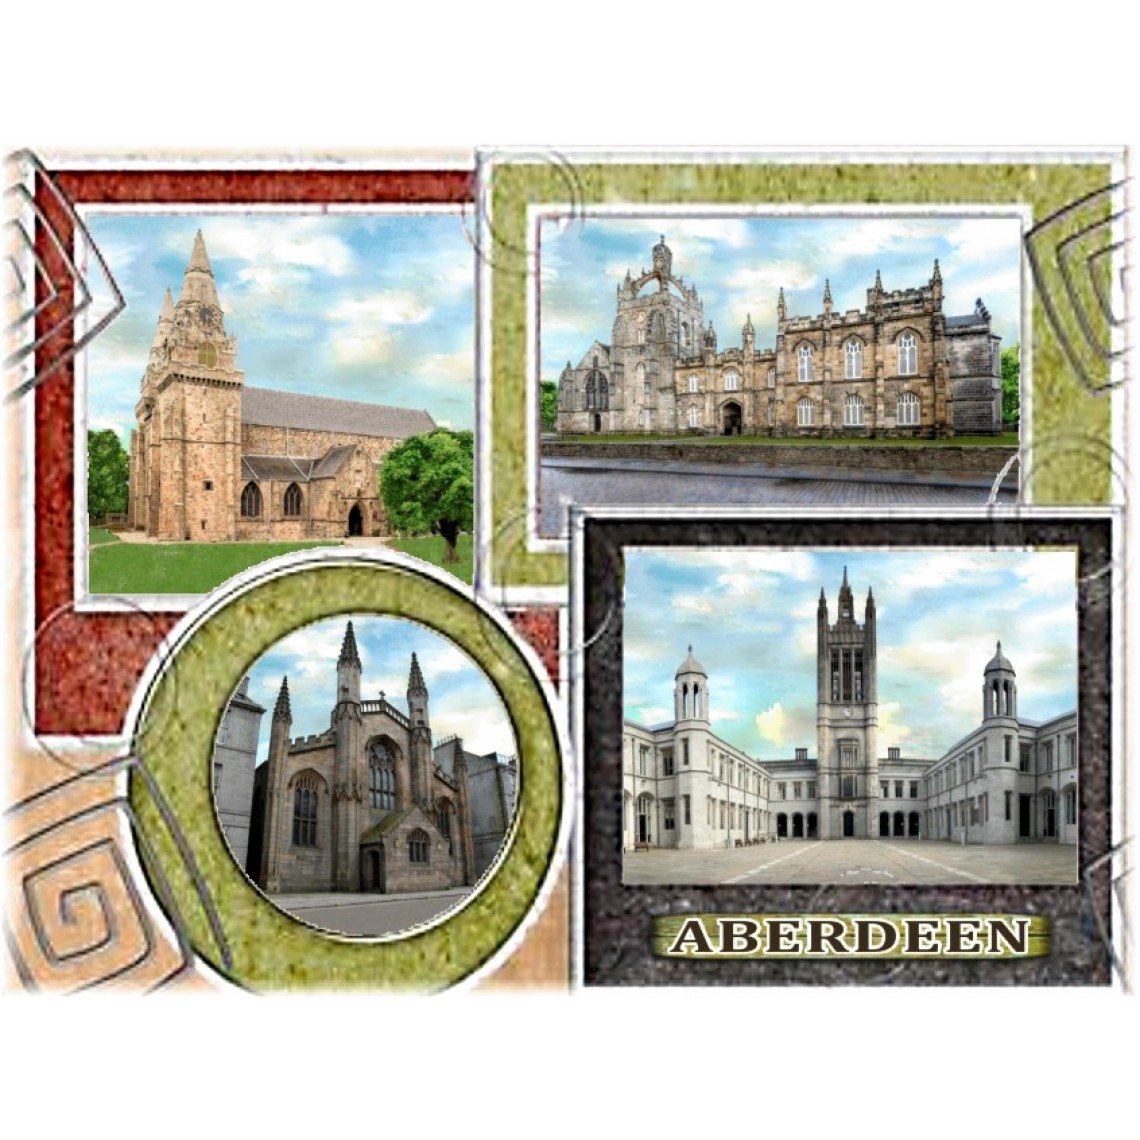 Aberdeen Souvenirs, Magnets, Gifts